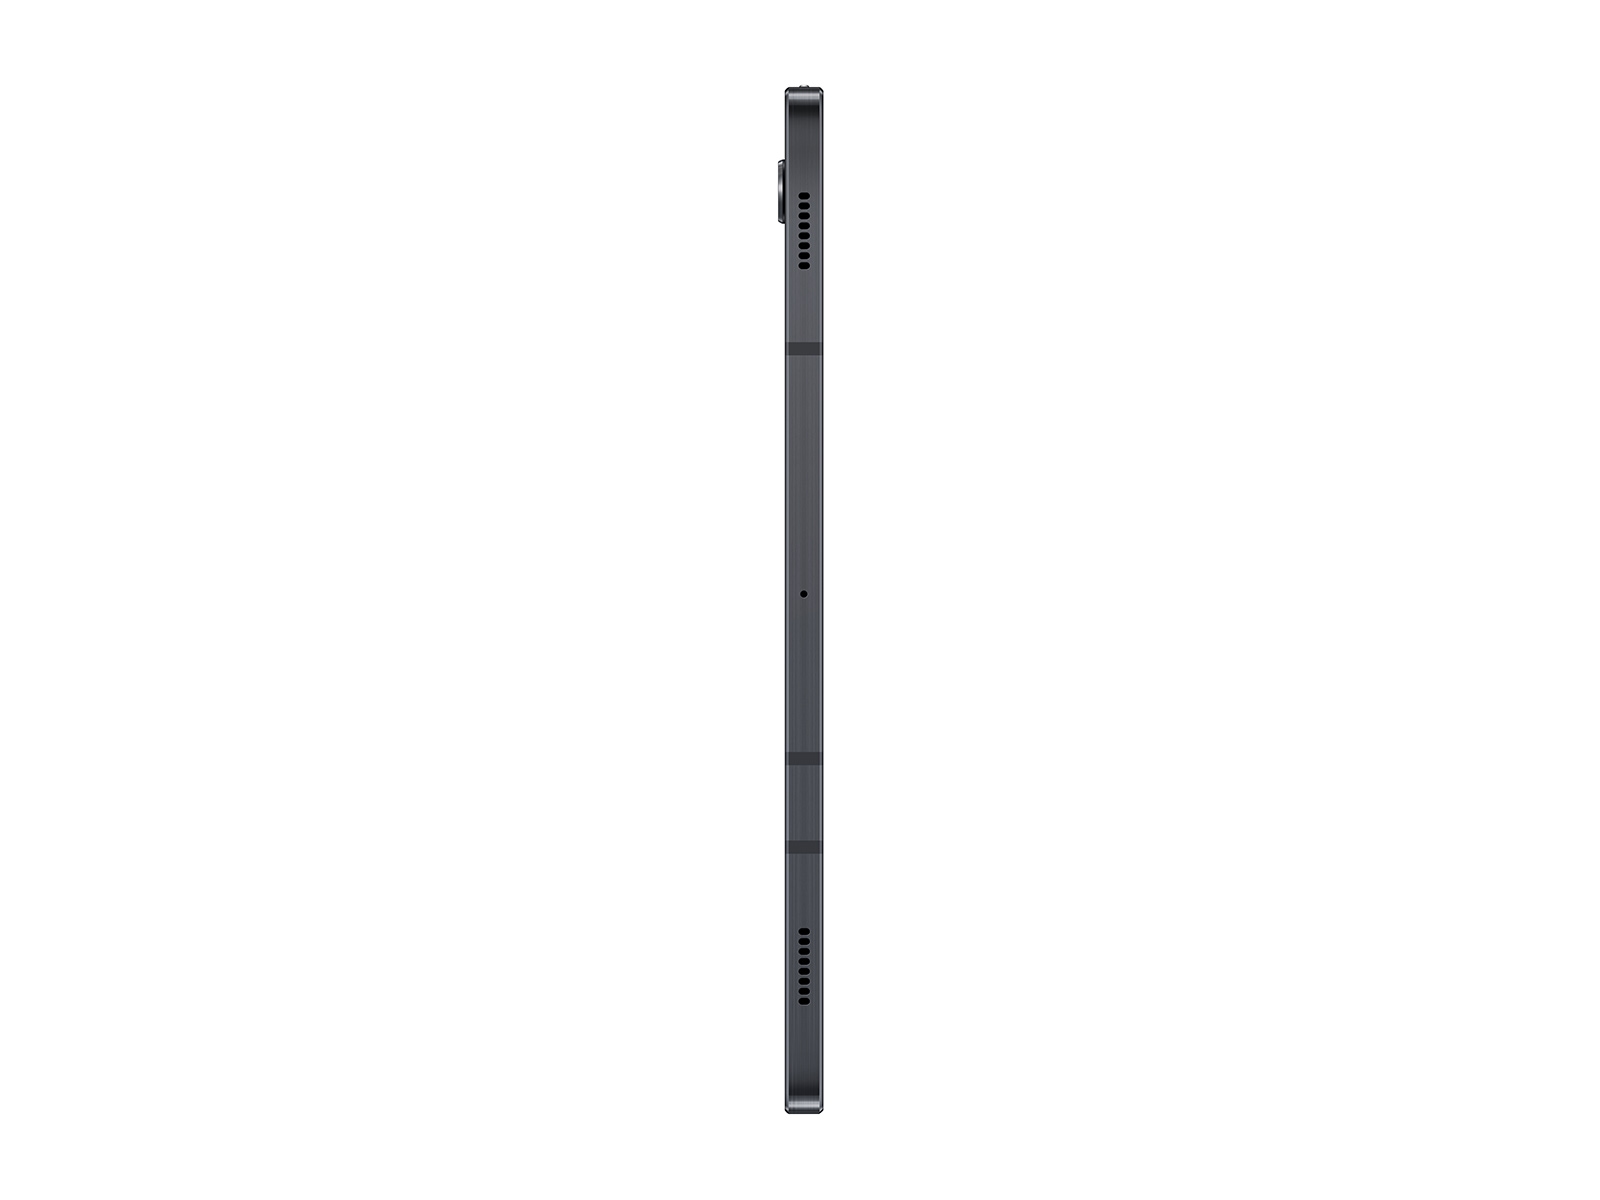 Samsung Galaxy Tab S7 SM-T878U Mystic Silver 128GB 6GB RAM Gsm Smart Tablet  Qualcomm SM8250 Snapdragon 865 5G 11.0 inches DISPLAY 11.0 inches, 350.9  cm2 PROCESSOR Qualcomm SM8250 Snapdragon 865 5G+ FRONT